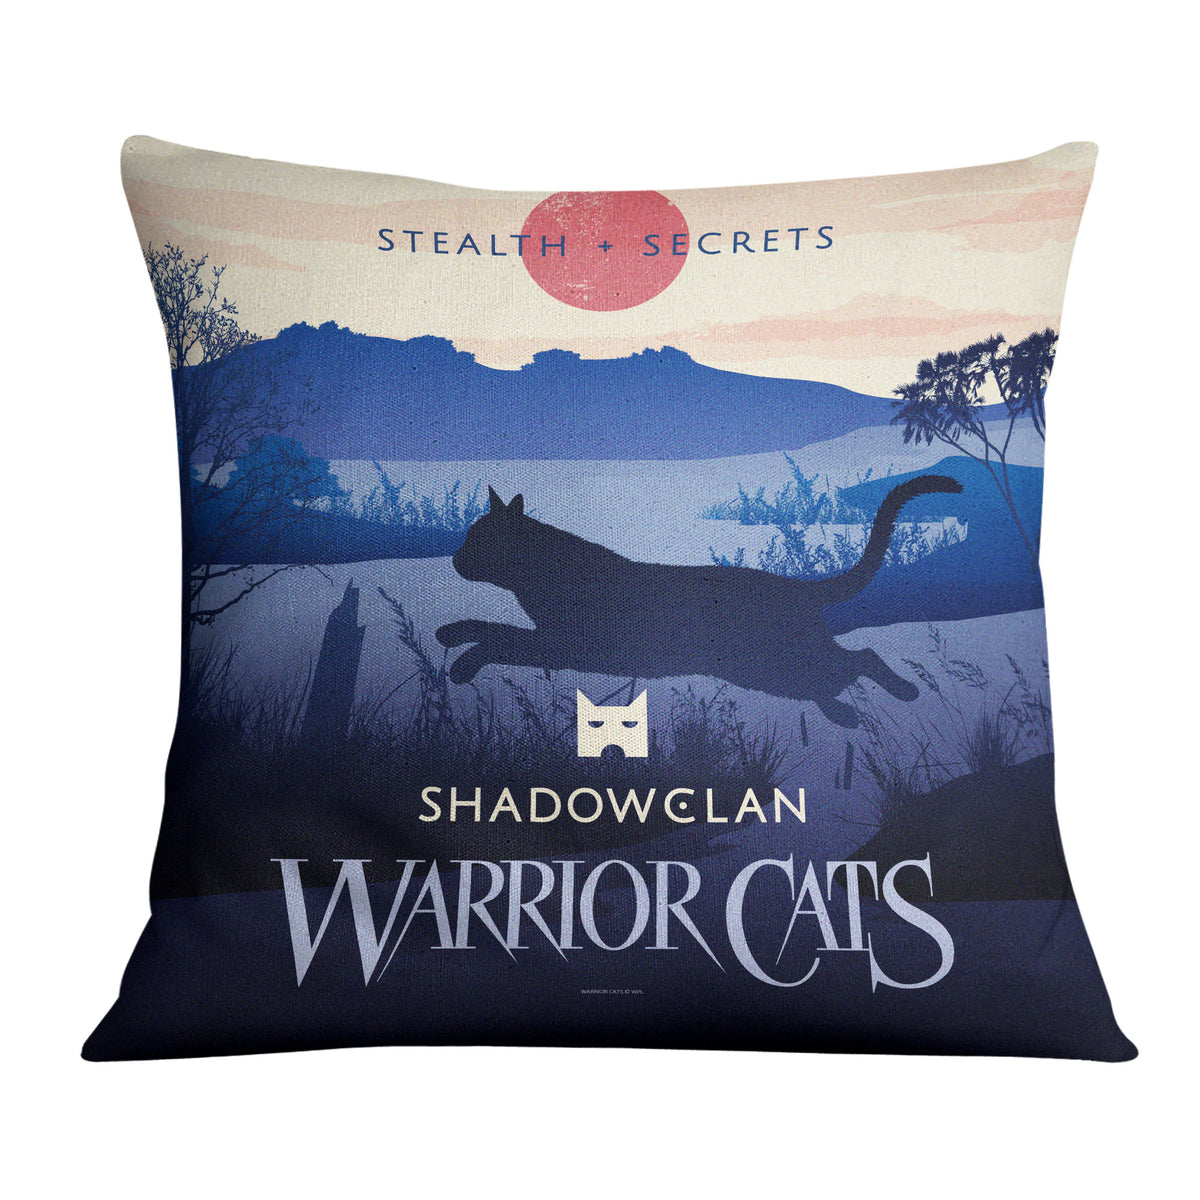 18x18 ShadowClan Cushion Warriors Cats Store - USA